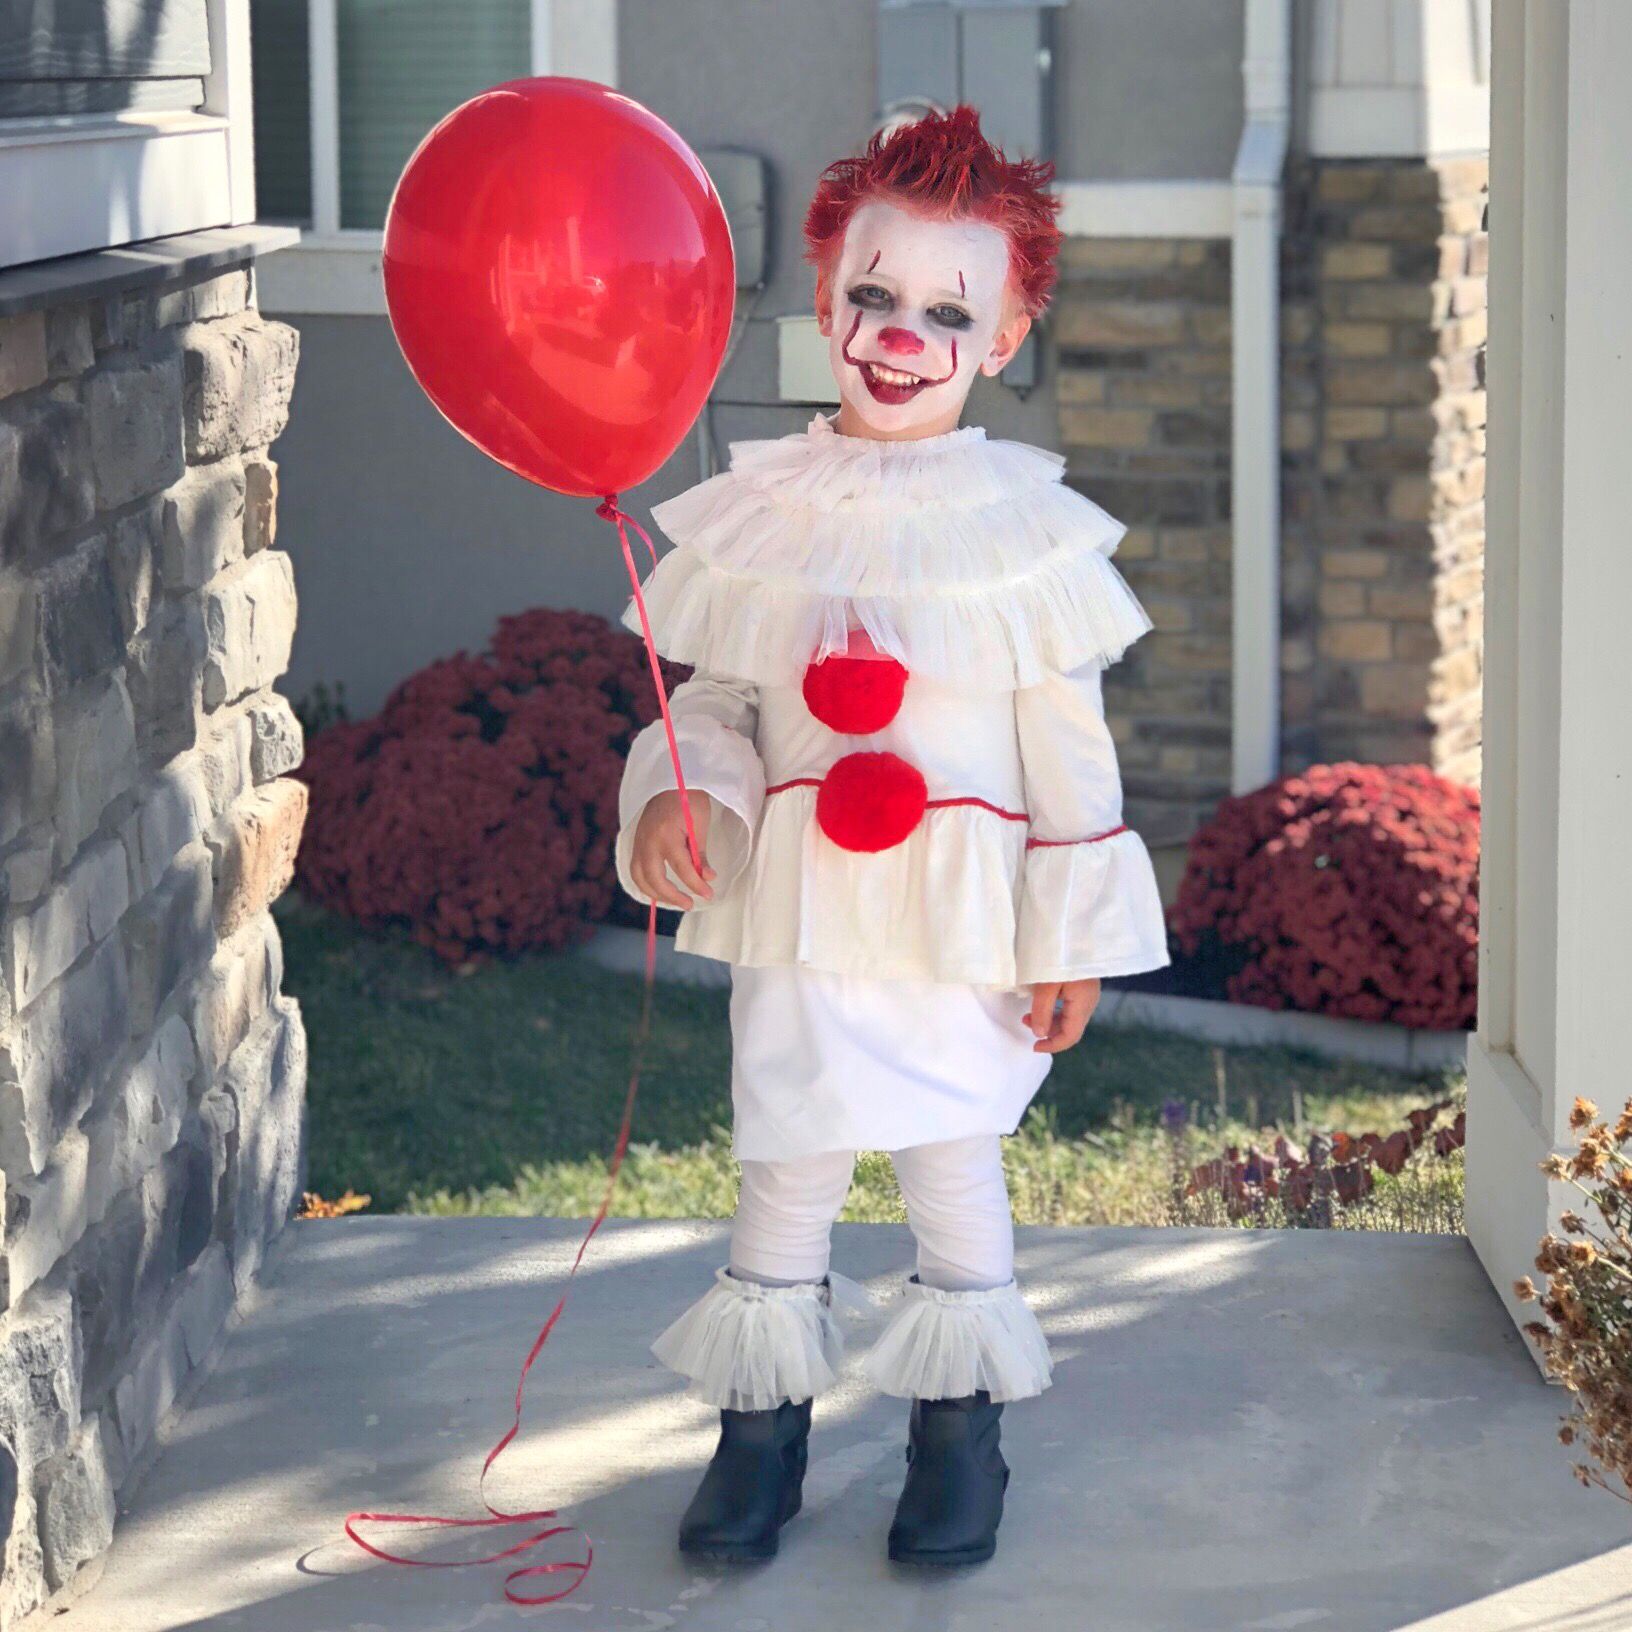 Creepy clown Halloween costume for kids